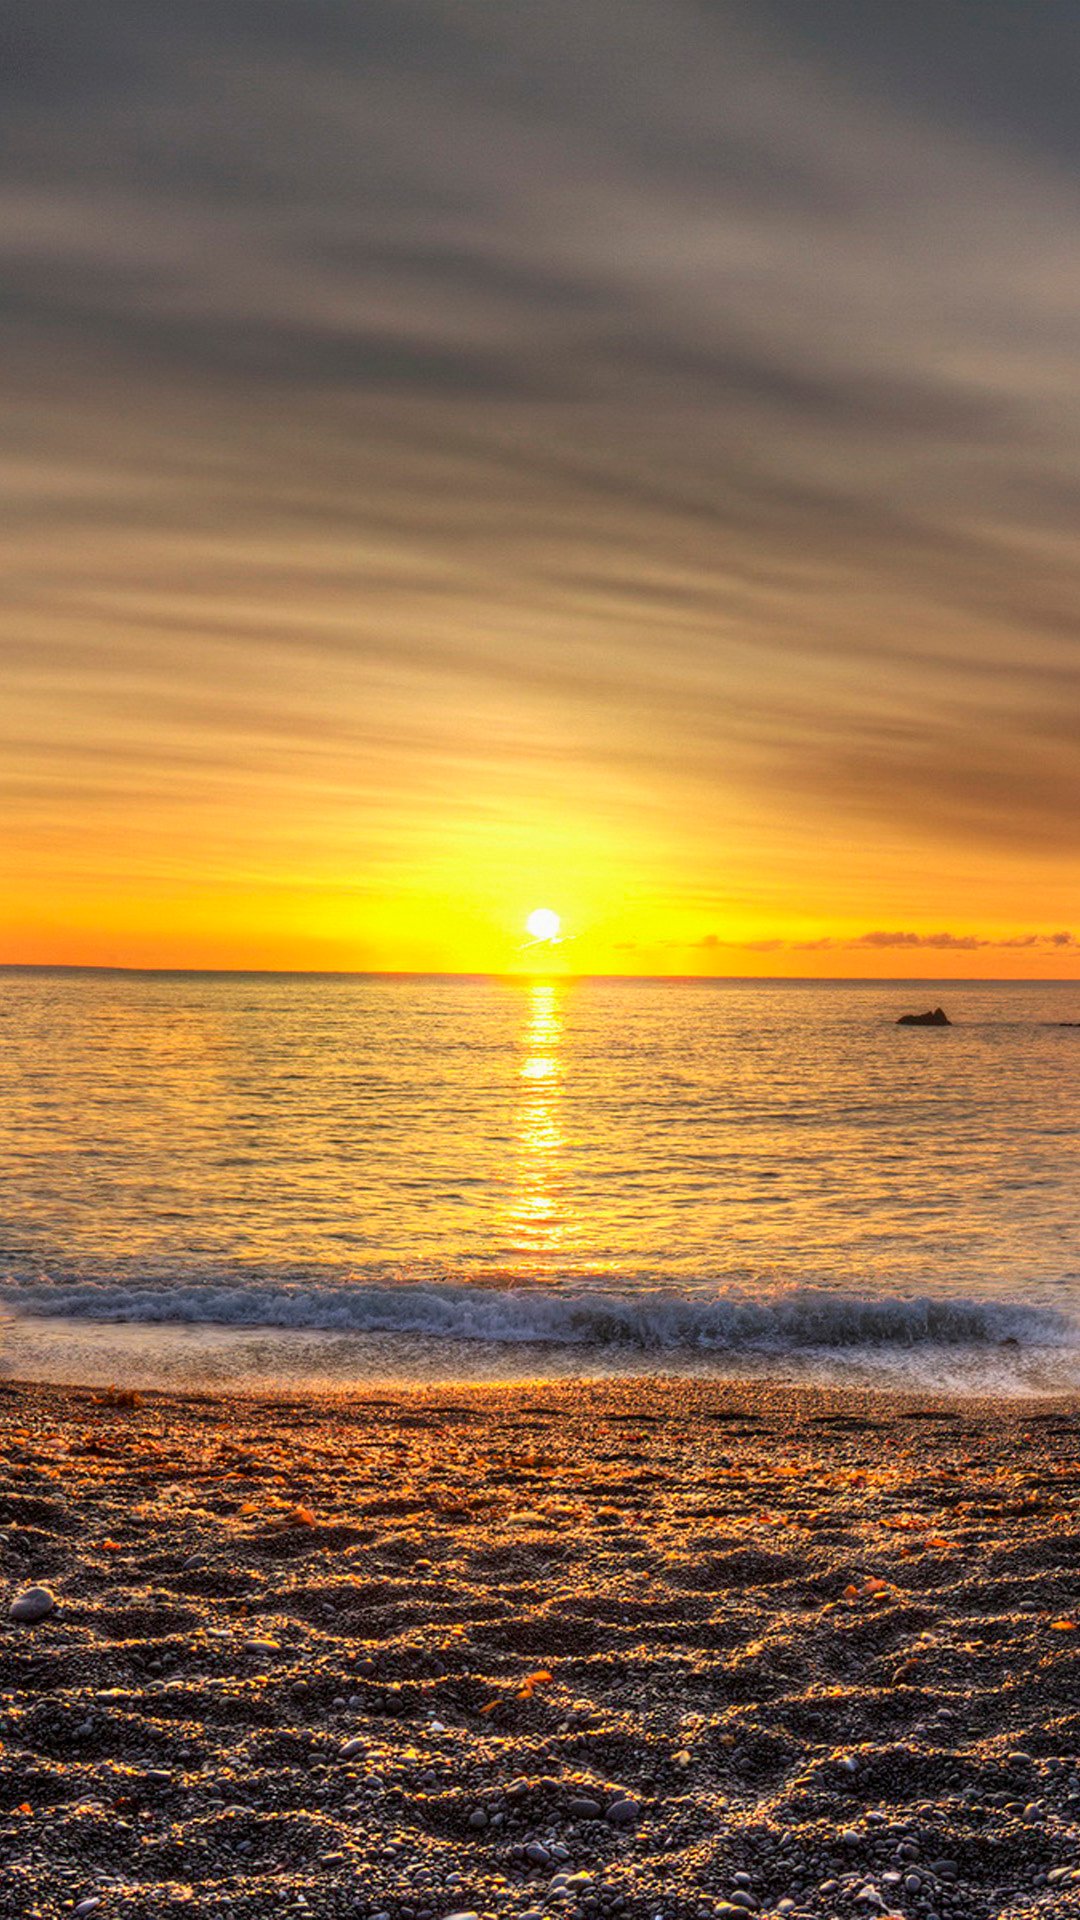 Beautiful Beach Sunset Wallpaper - WallpaperSafari